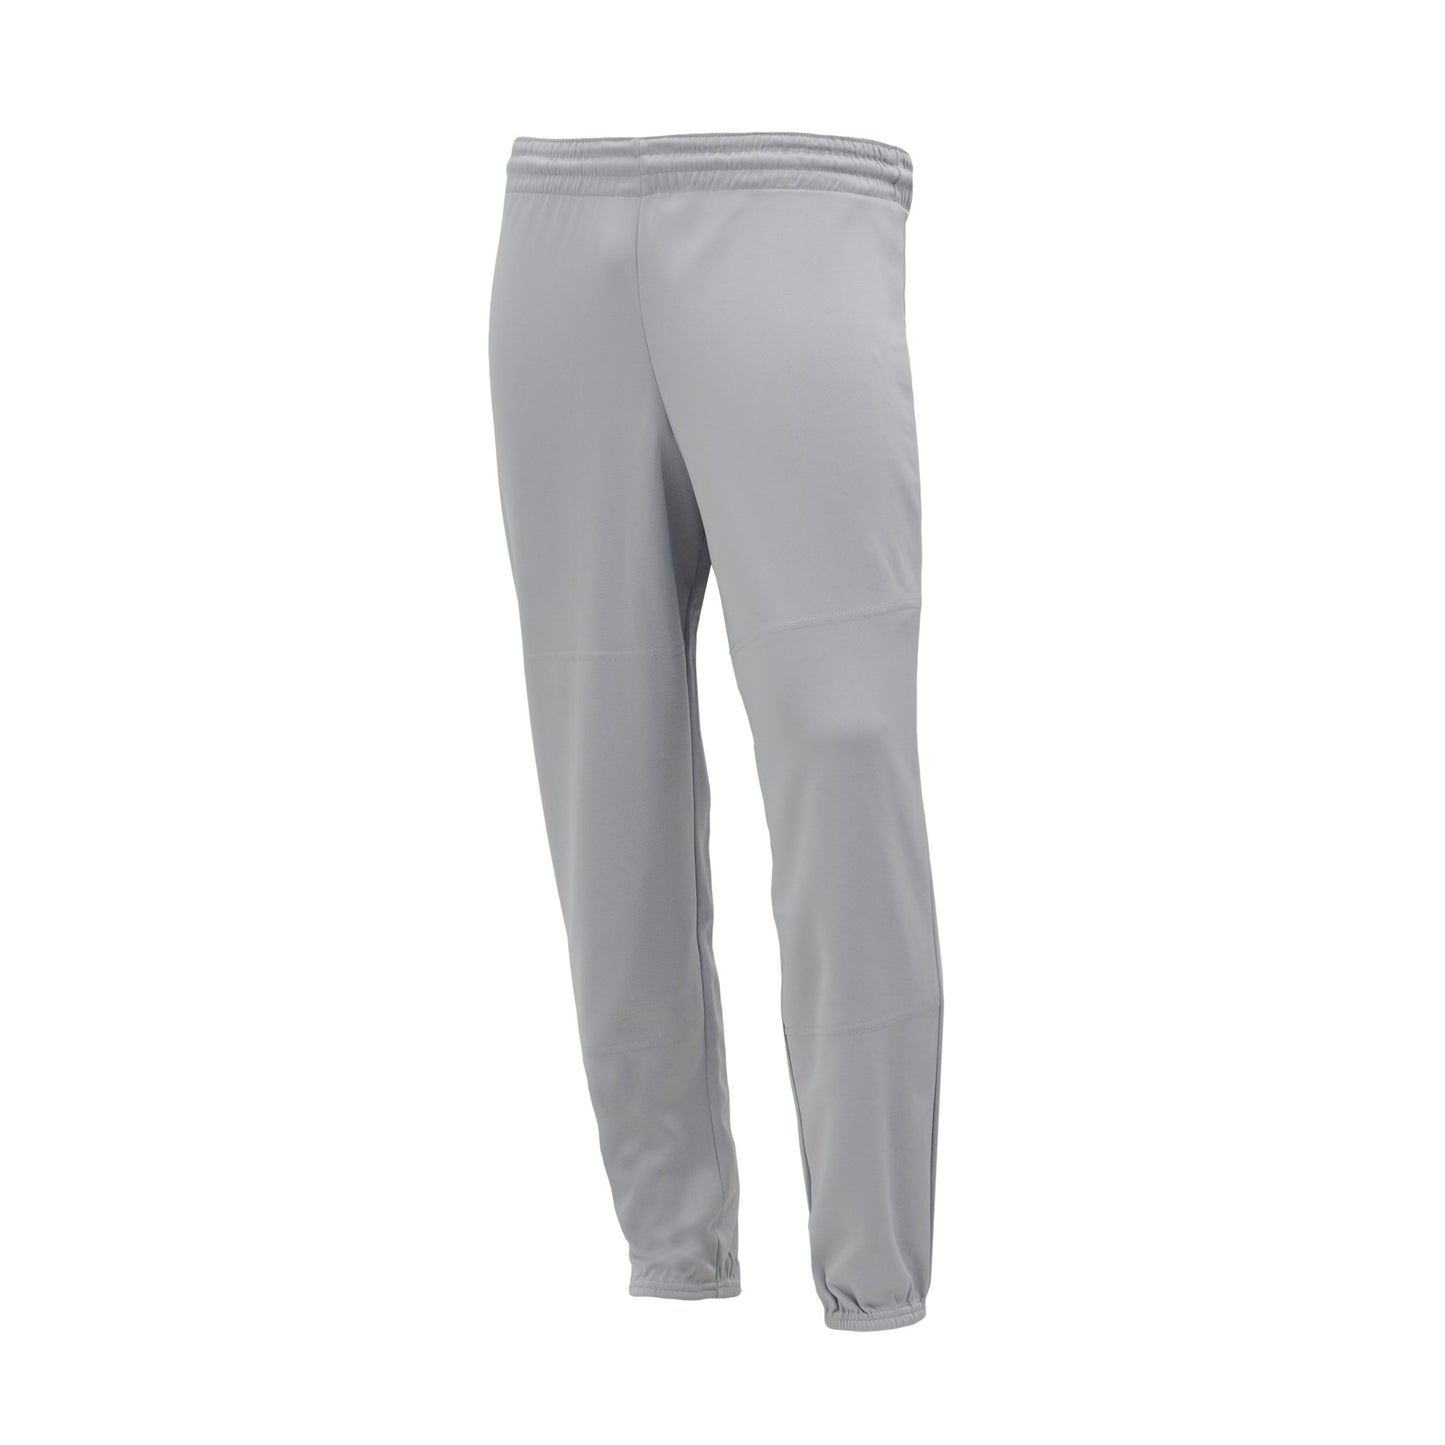 Premium Baseball Pants, Drawstring, Elastic Bottom, Grey, ba1371-012